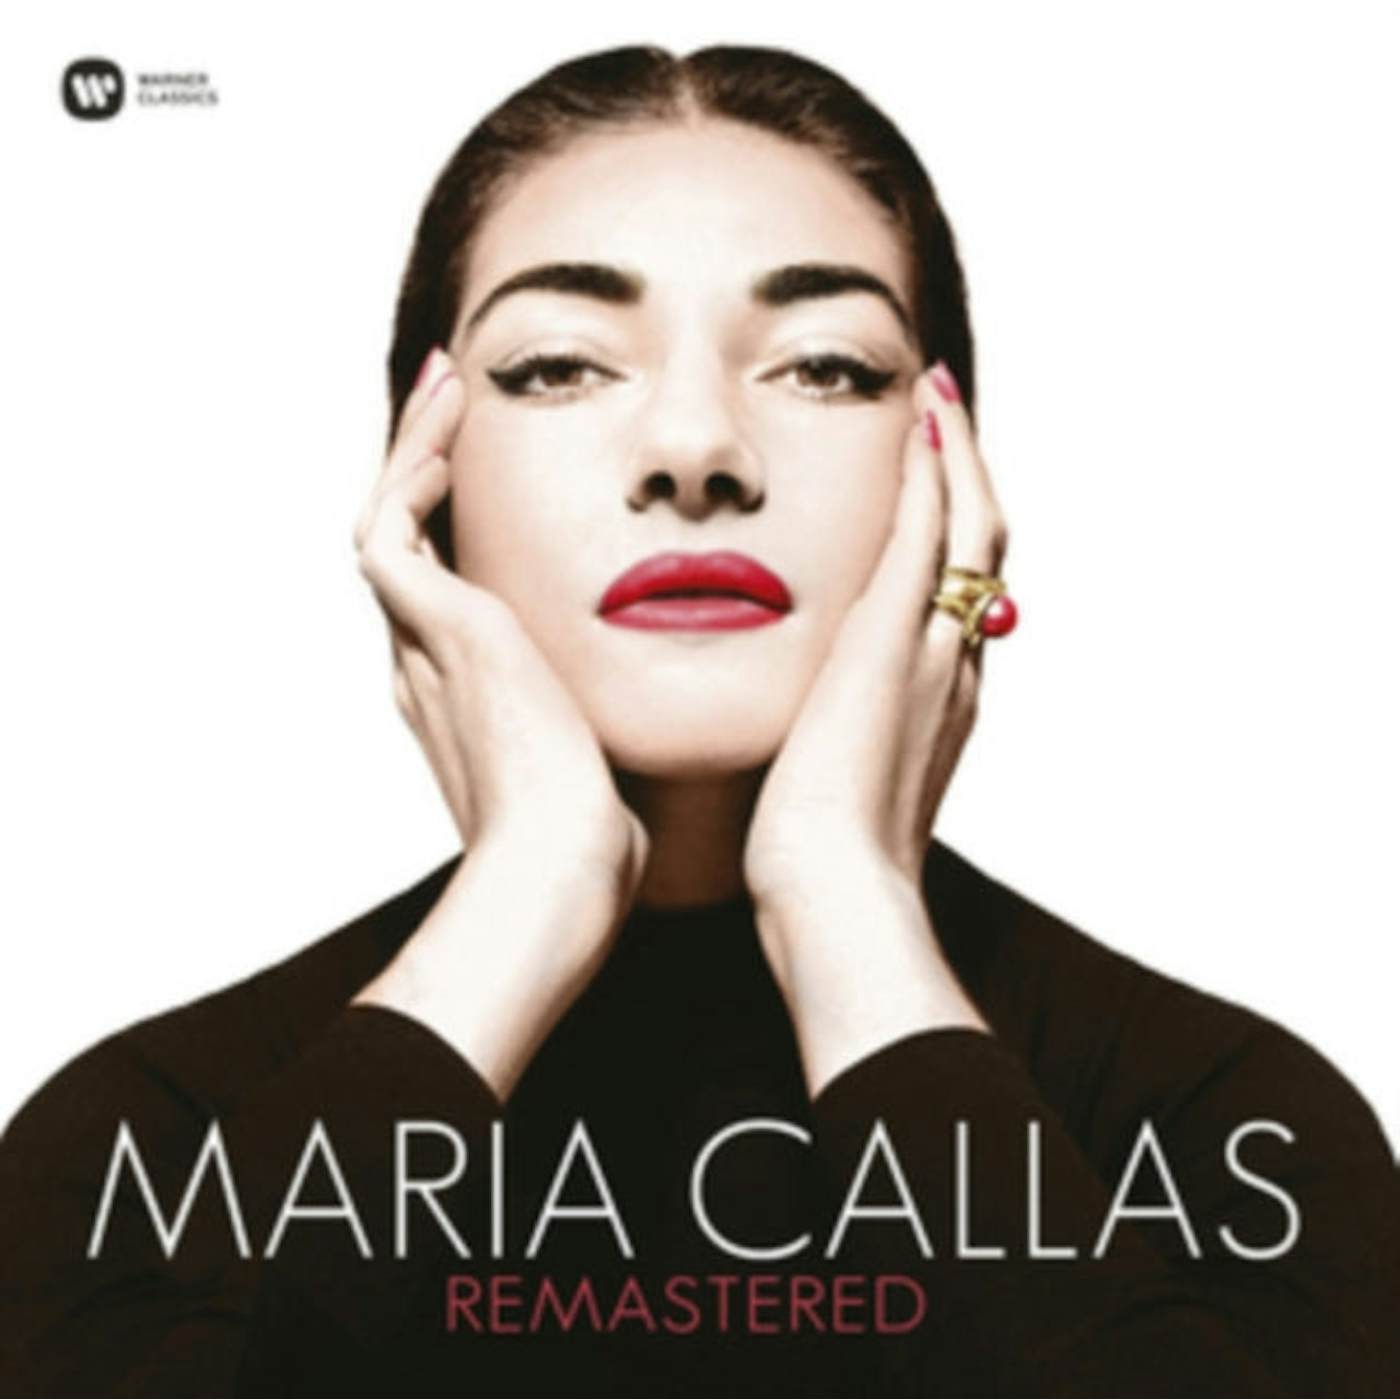 Maria Callas LP - Remastered (Vinyl)